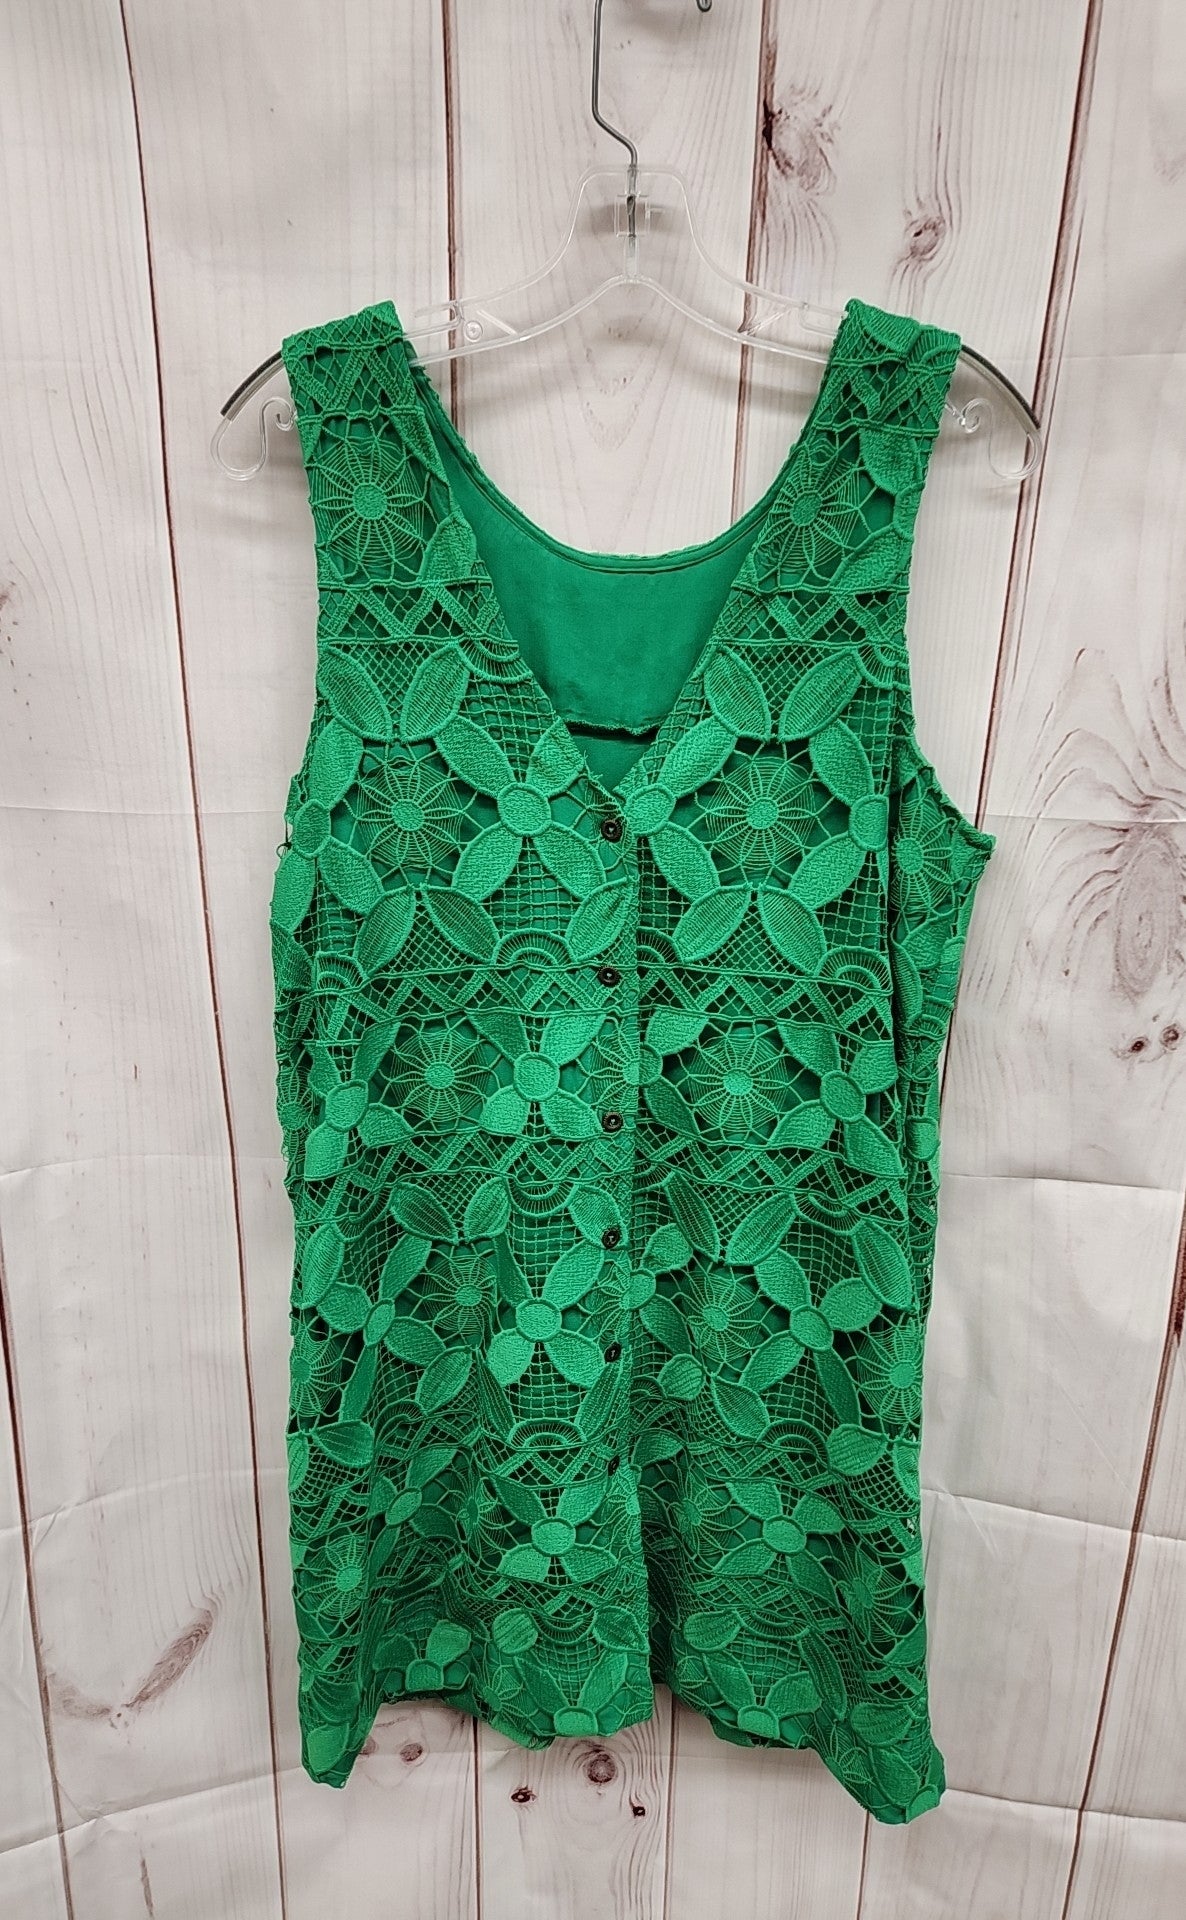 Anthropologie Women's Size M Green Floral Dress